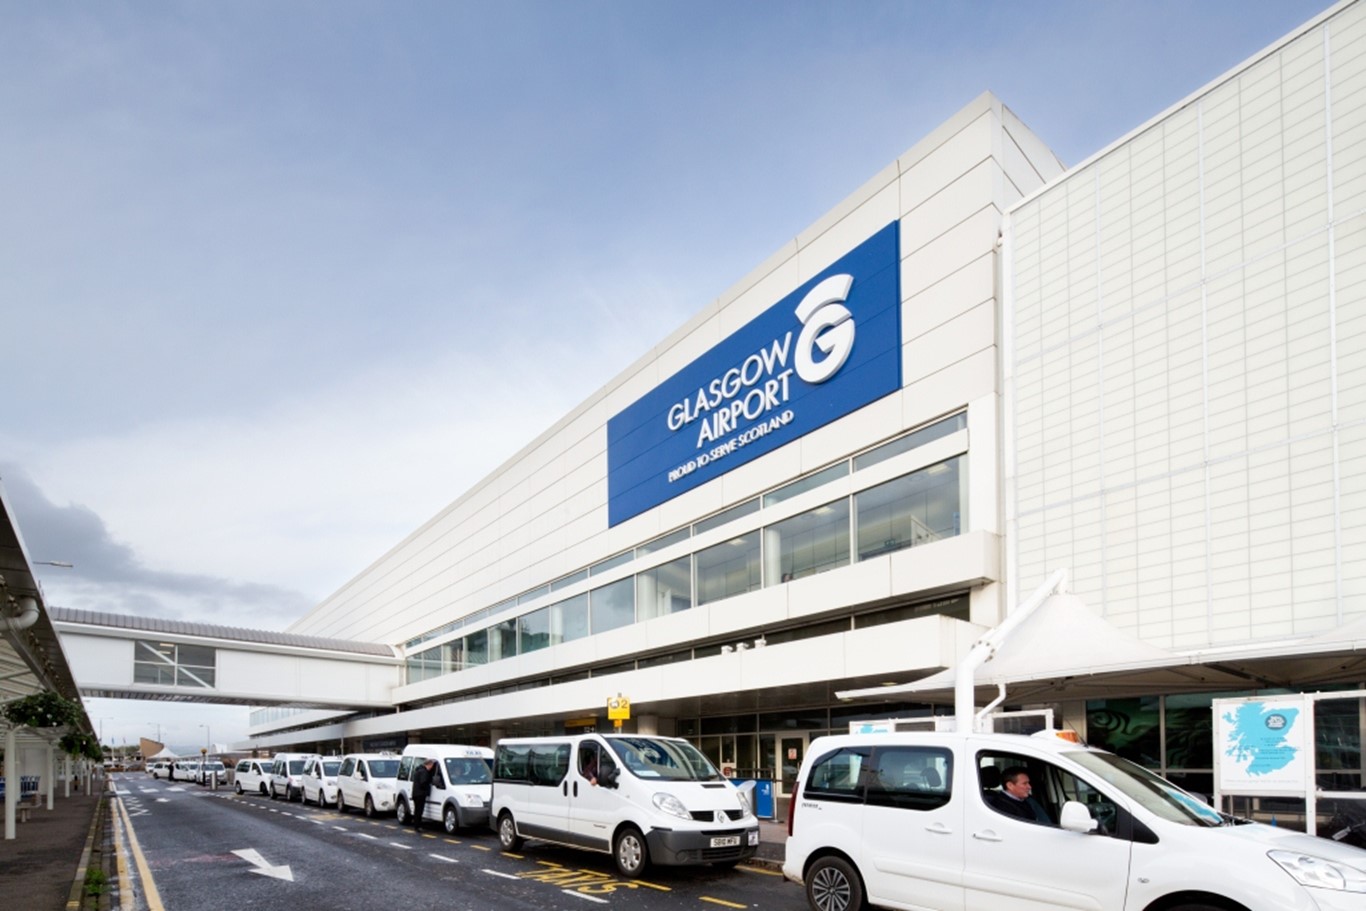 Glasgow Airport lands International Safety Award